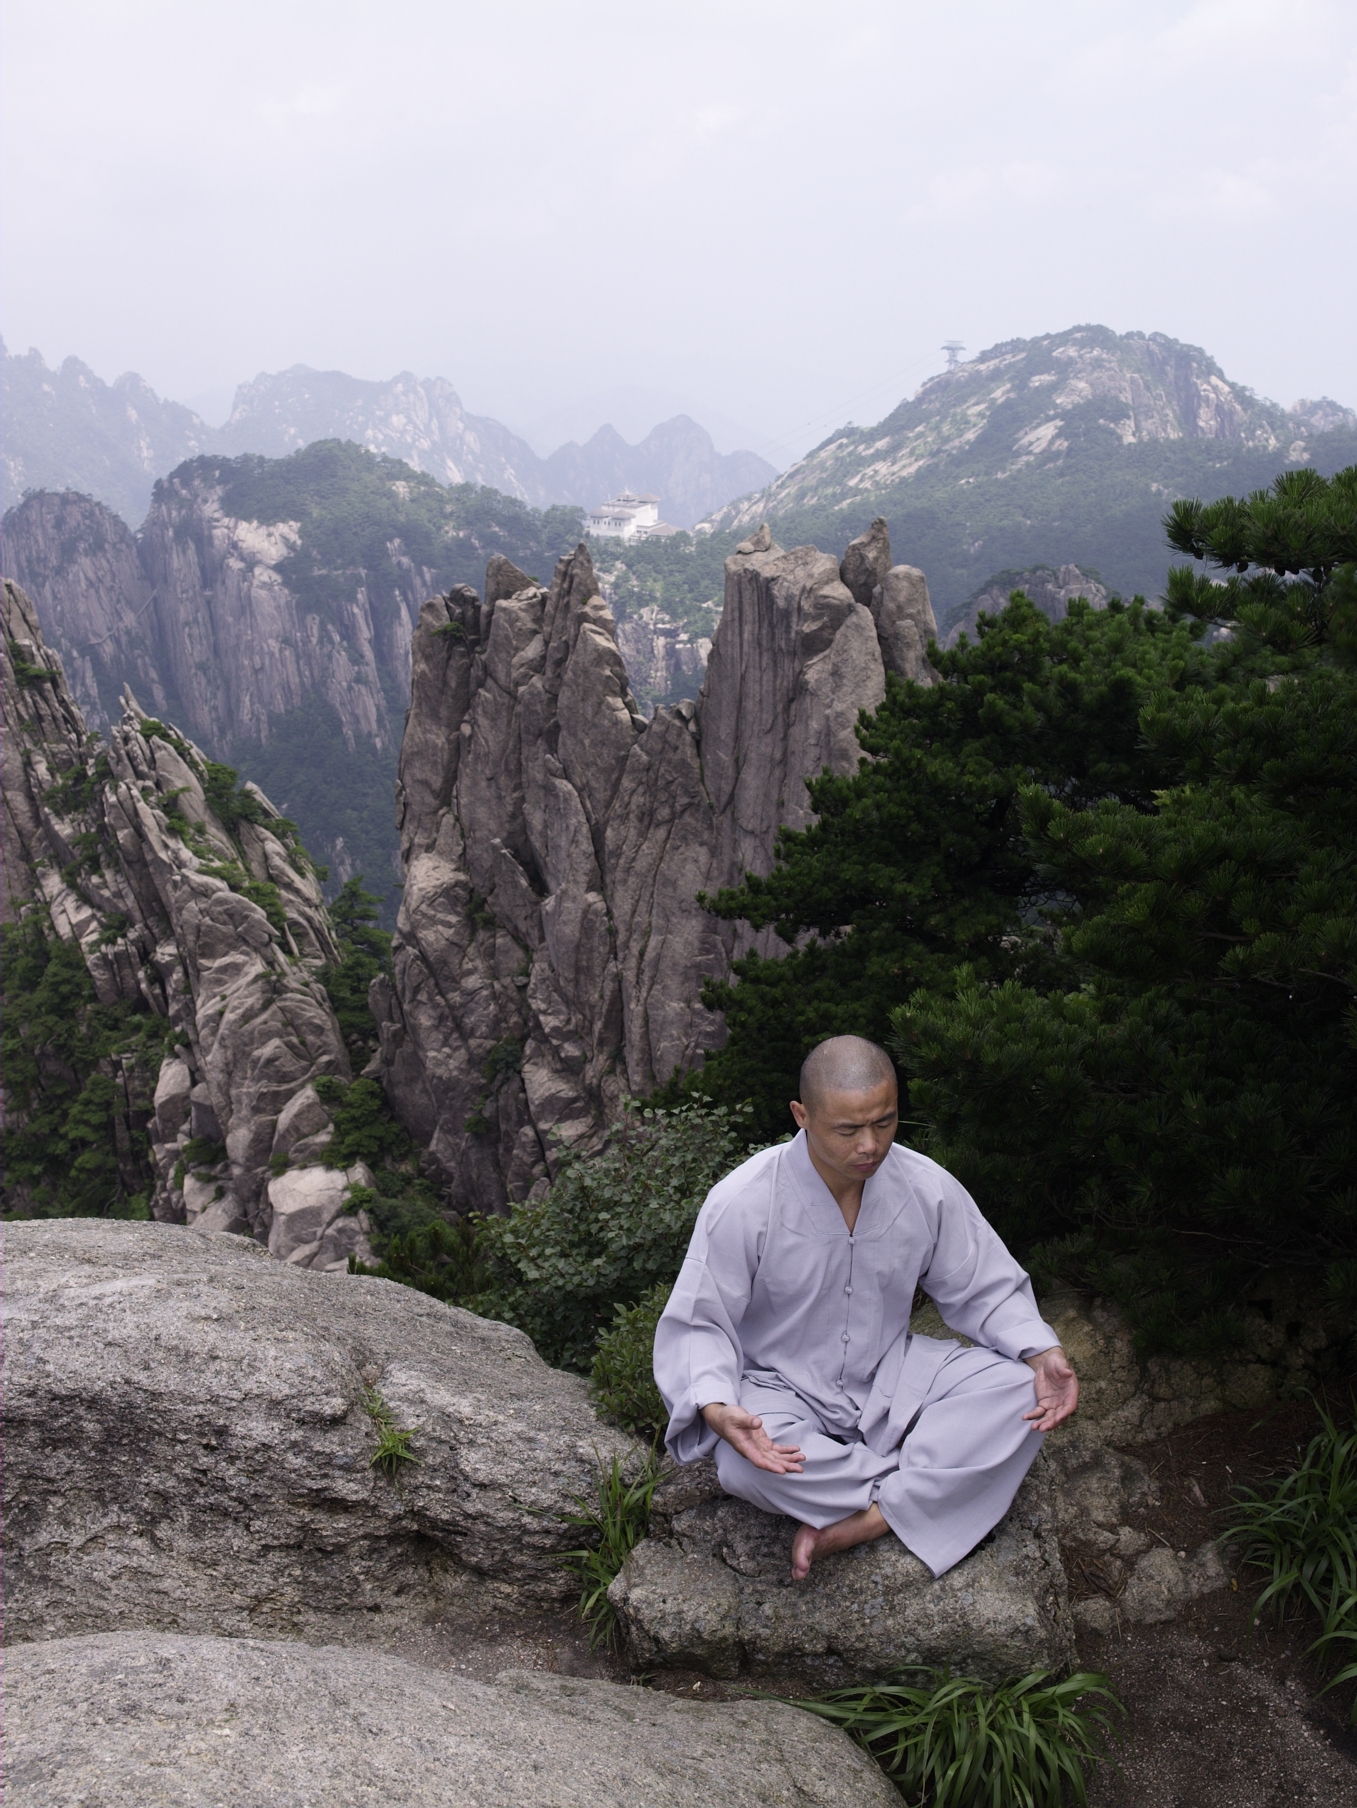 Медитации храмов. Китайский монах даос. Цигун даос монах. Тибет монастырь Шаолинь. Горный Китай монастырь Чжуан.